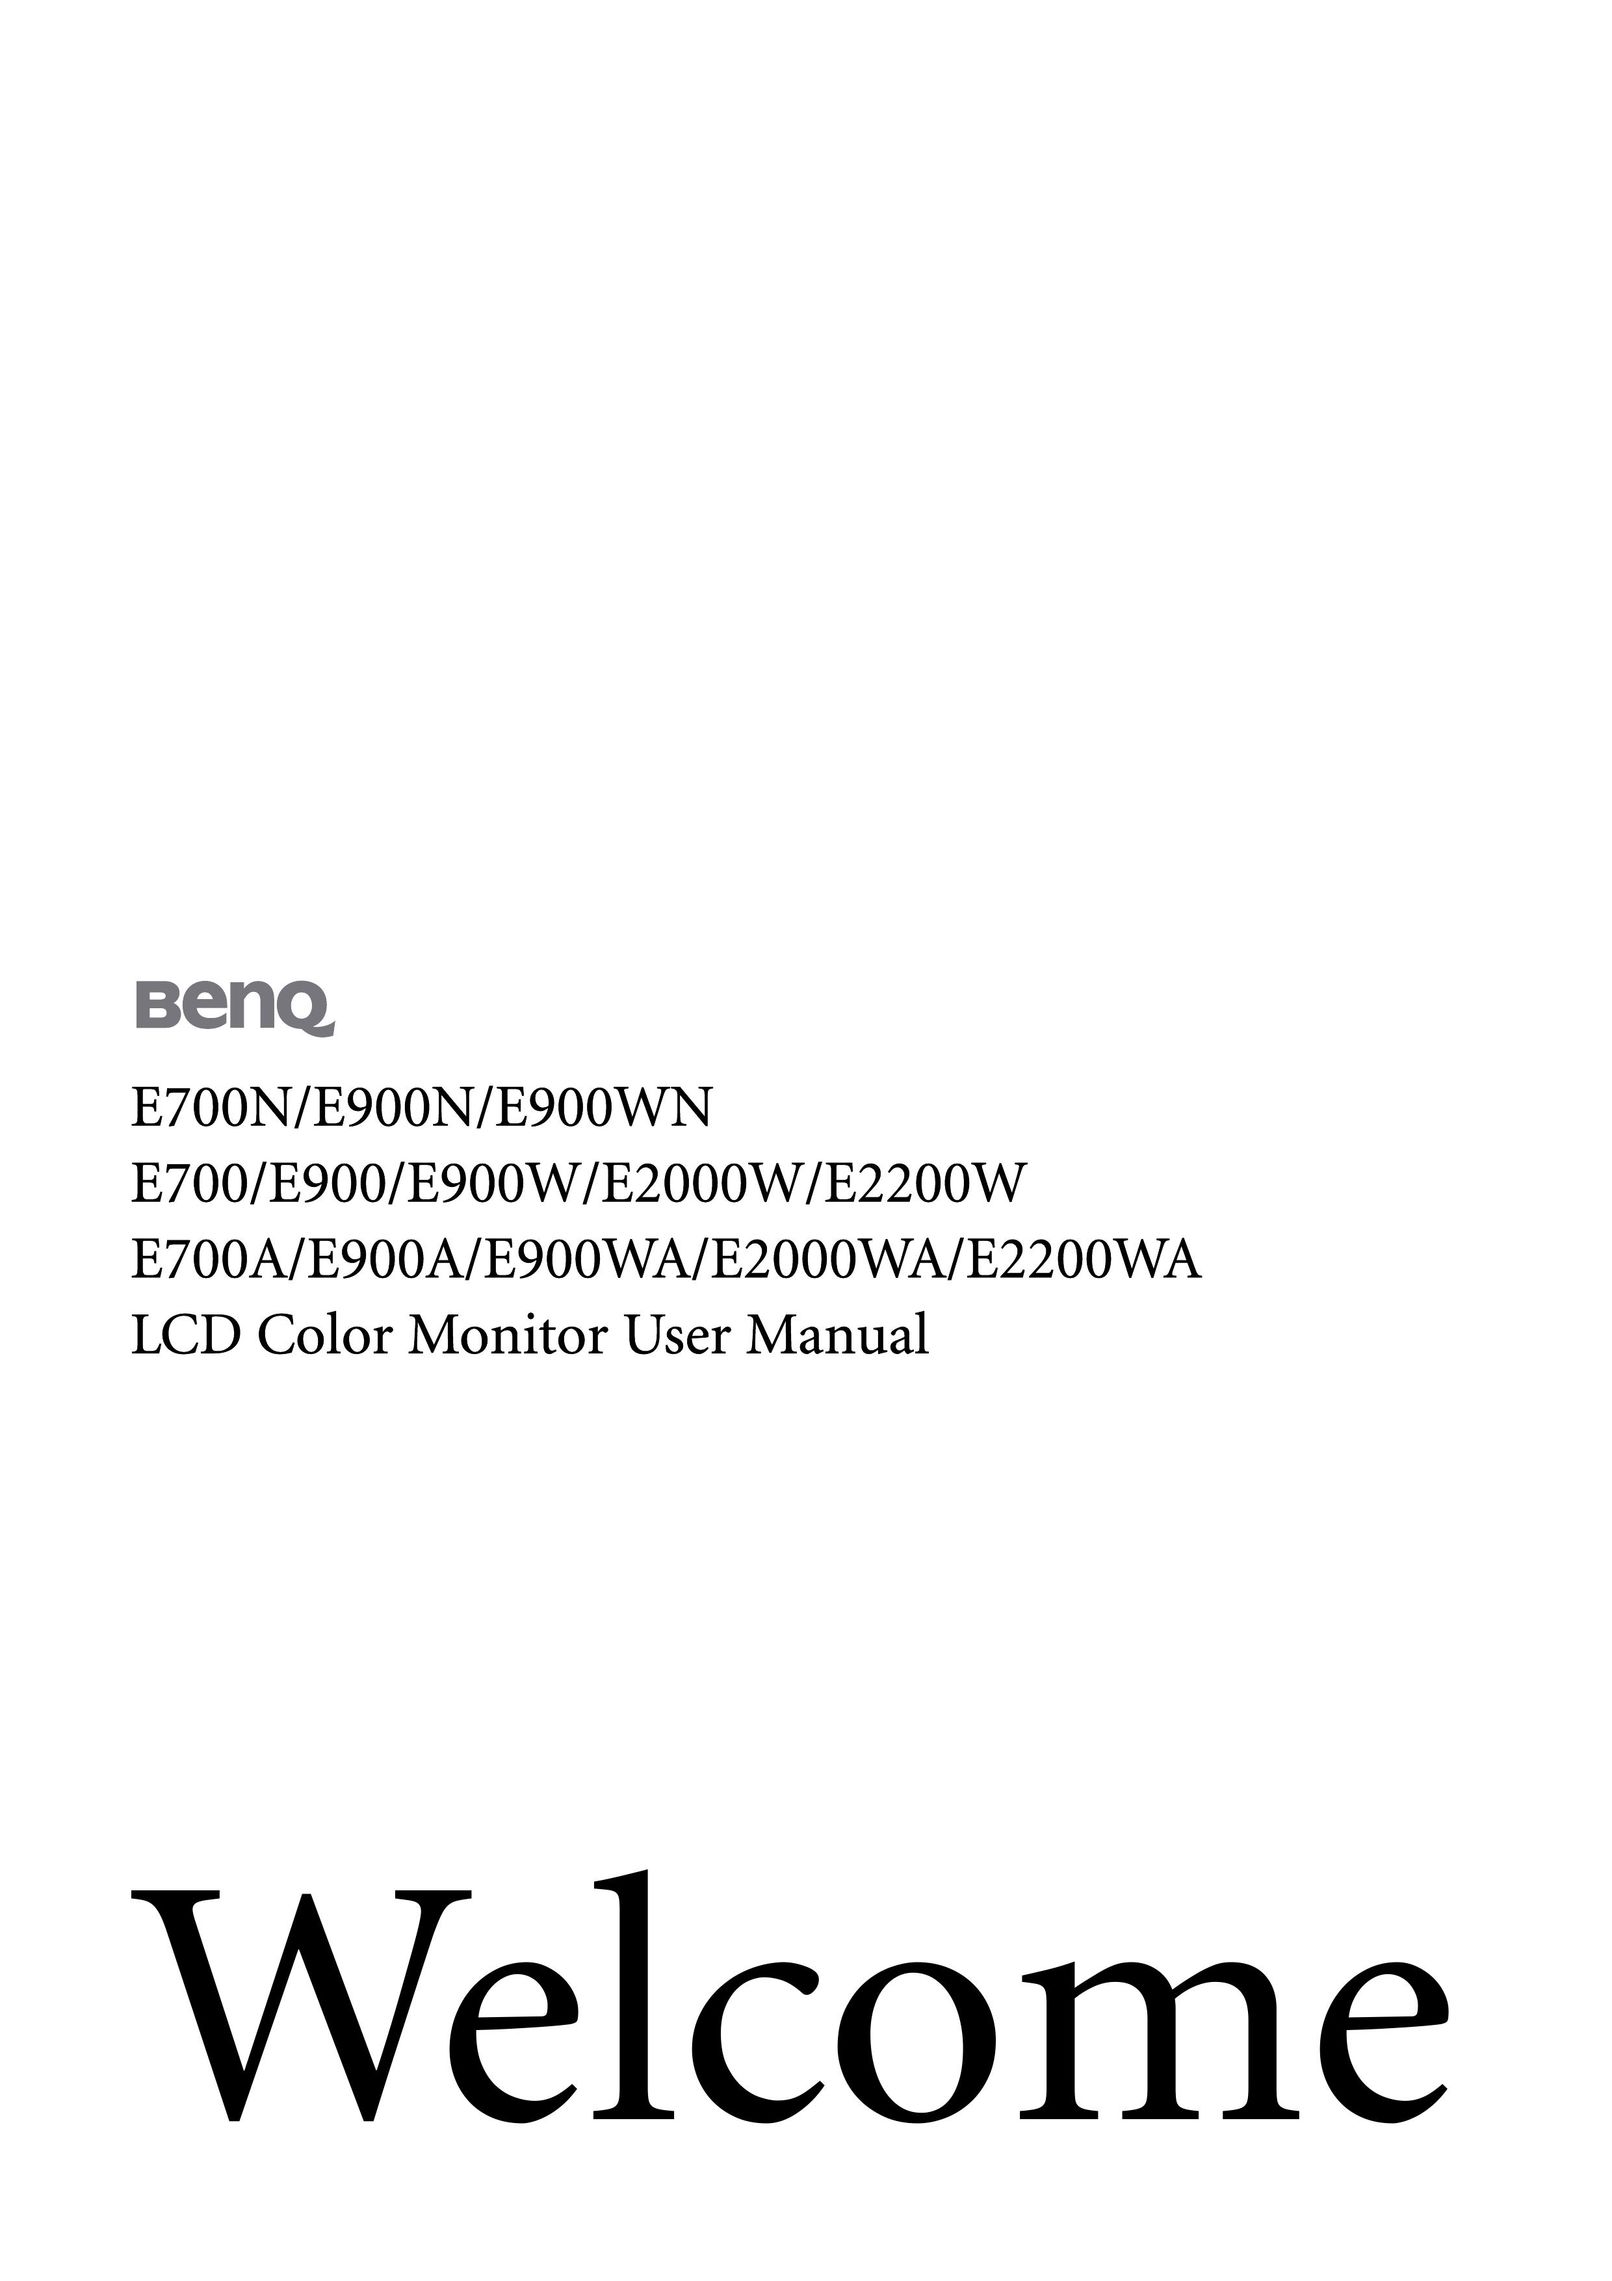 BenQ E2200WA Computer Monitor User Manual